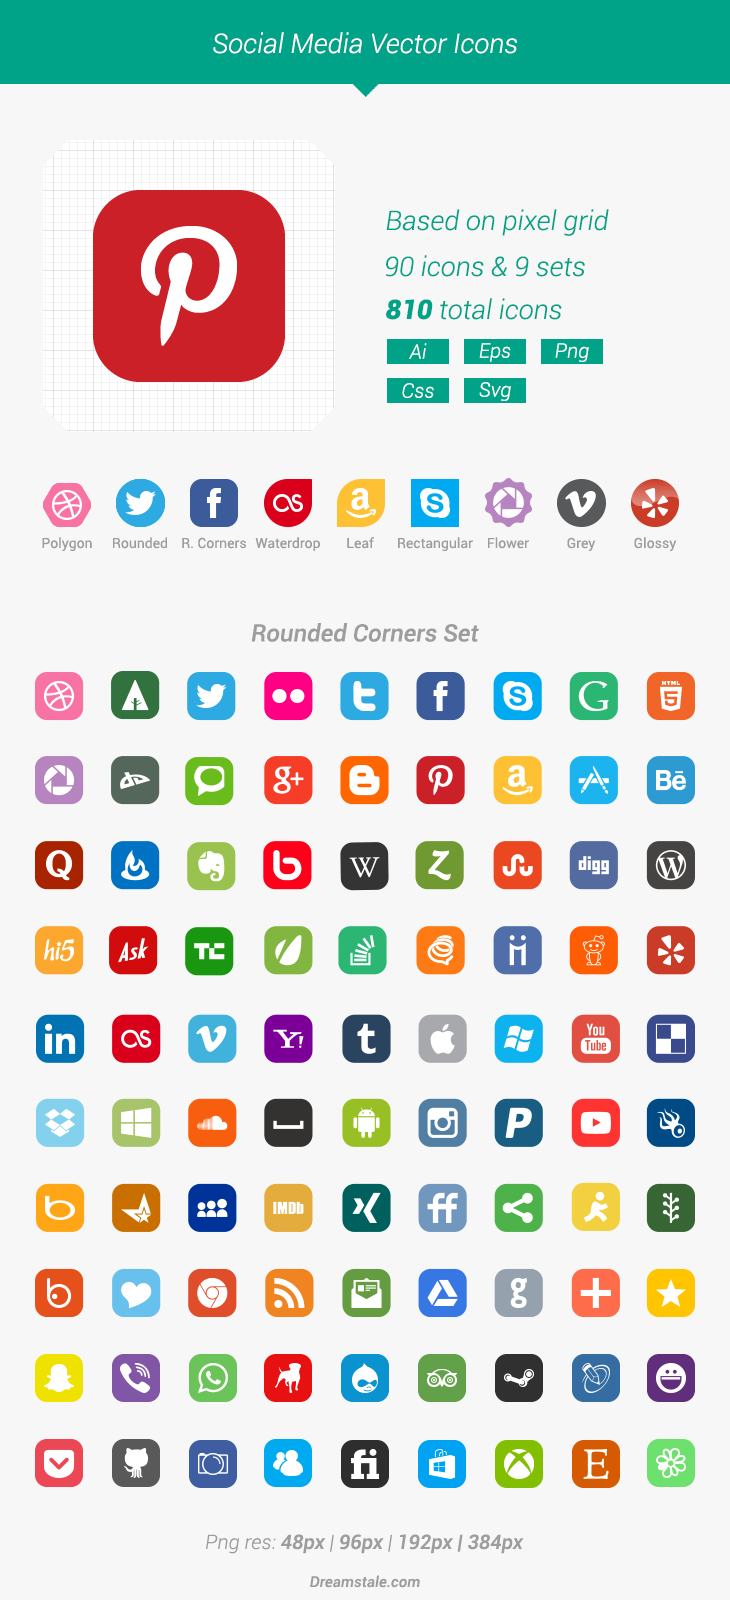 glossy round social media icons